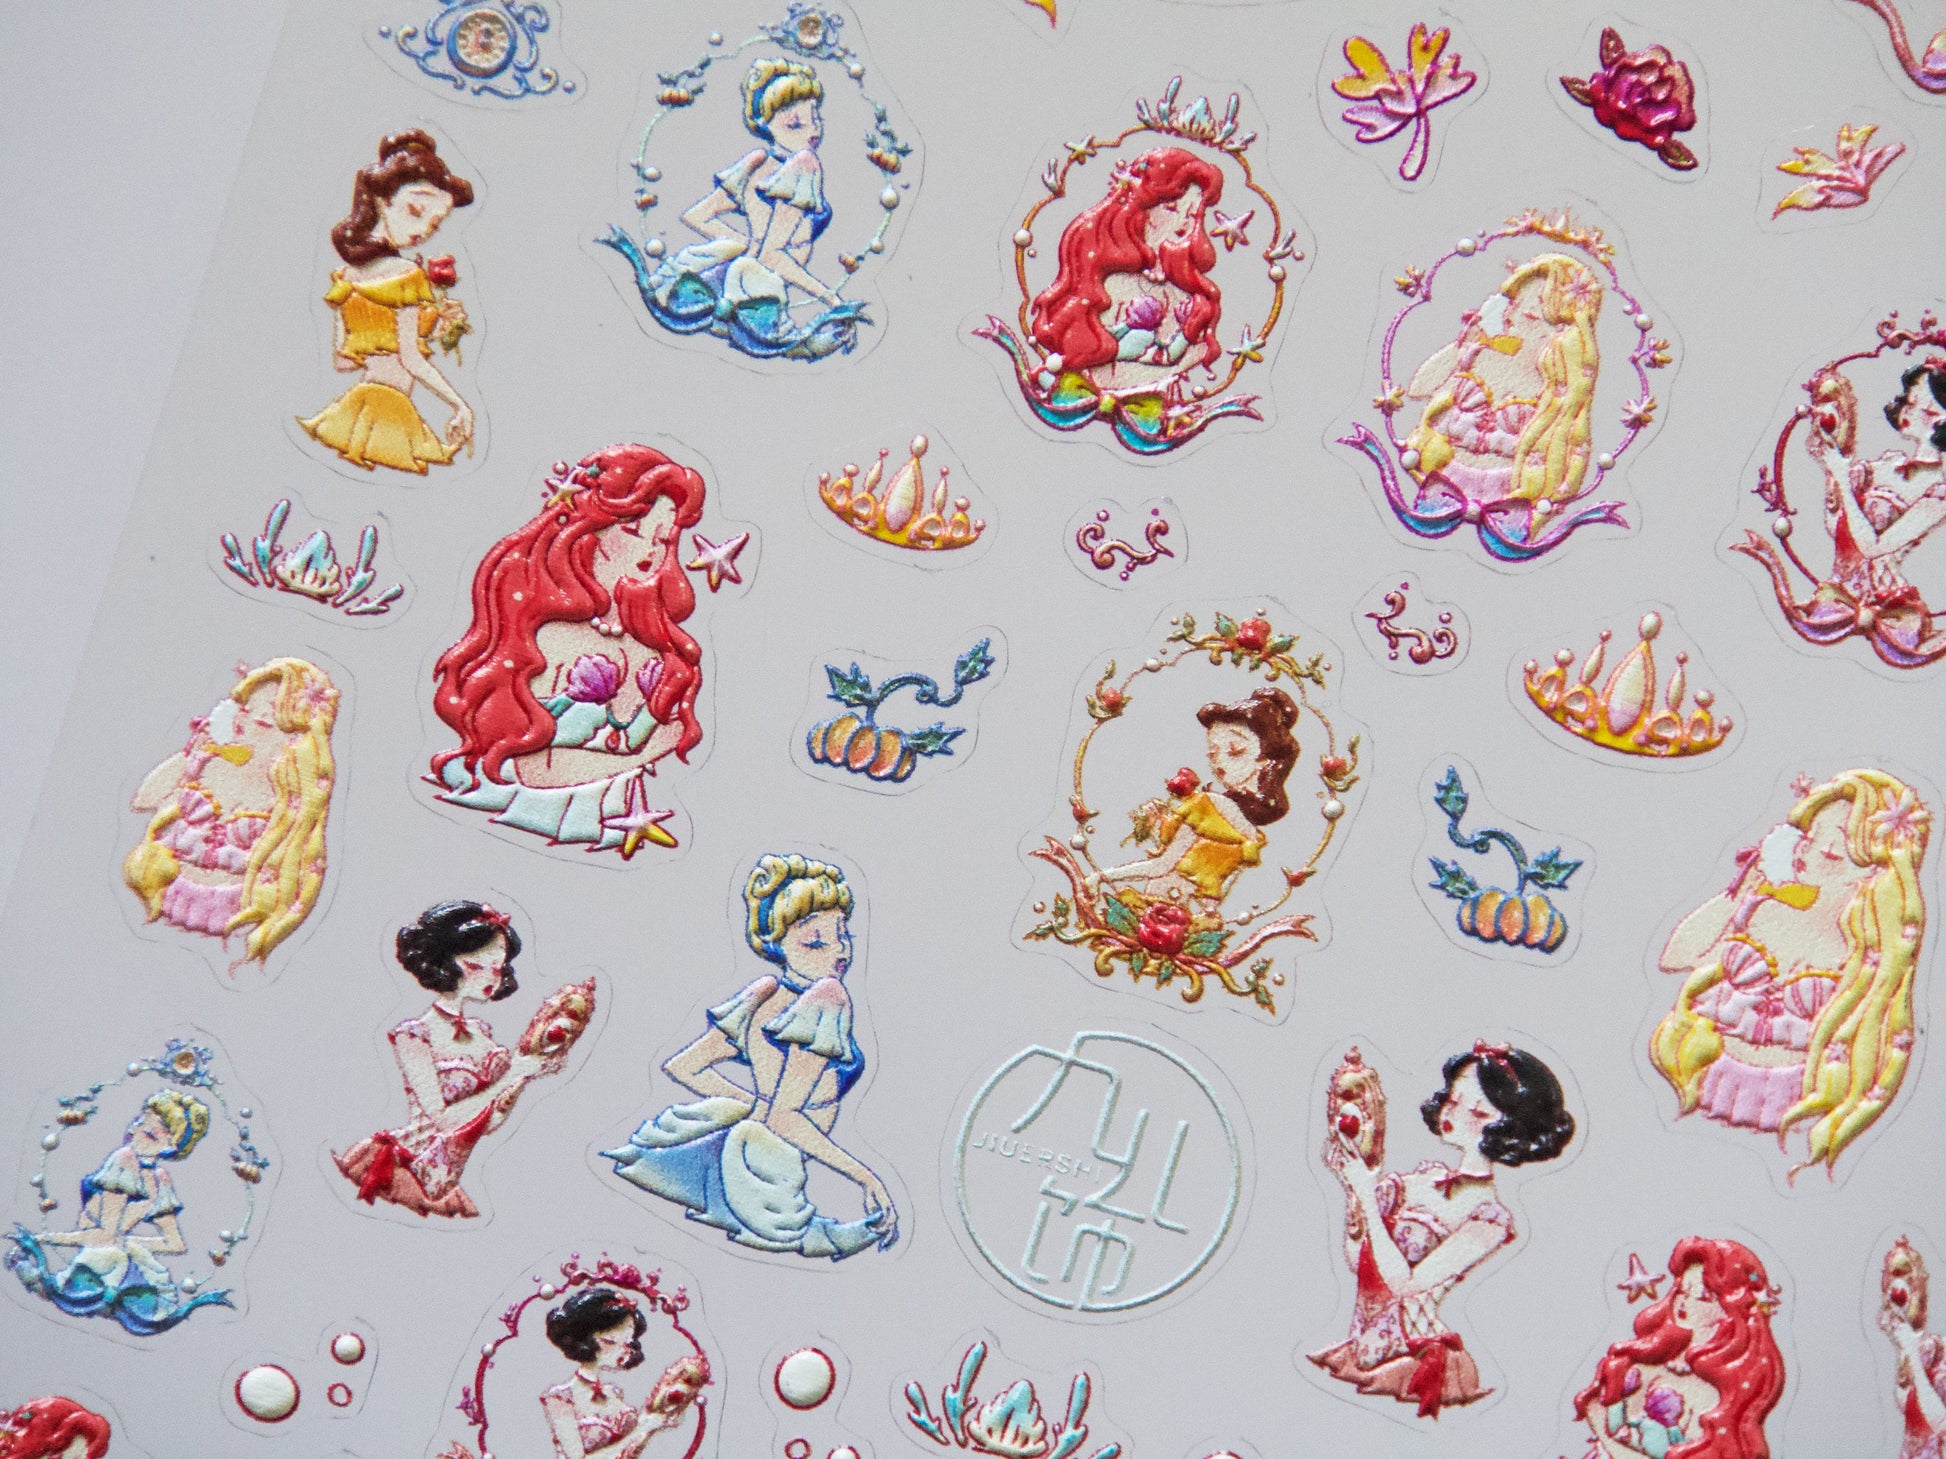 Disney Princess Nail Sticker Ariel Cinderella Snow White Sleeping Beauty Aurora Belle Cartoon Nail Stickers/ Fairy Tale Enchanted Kingdom